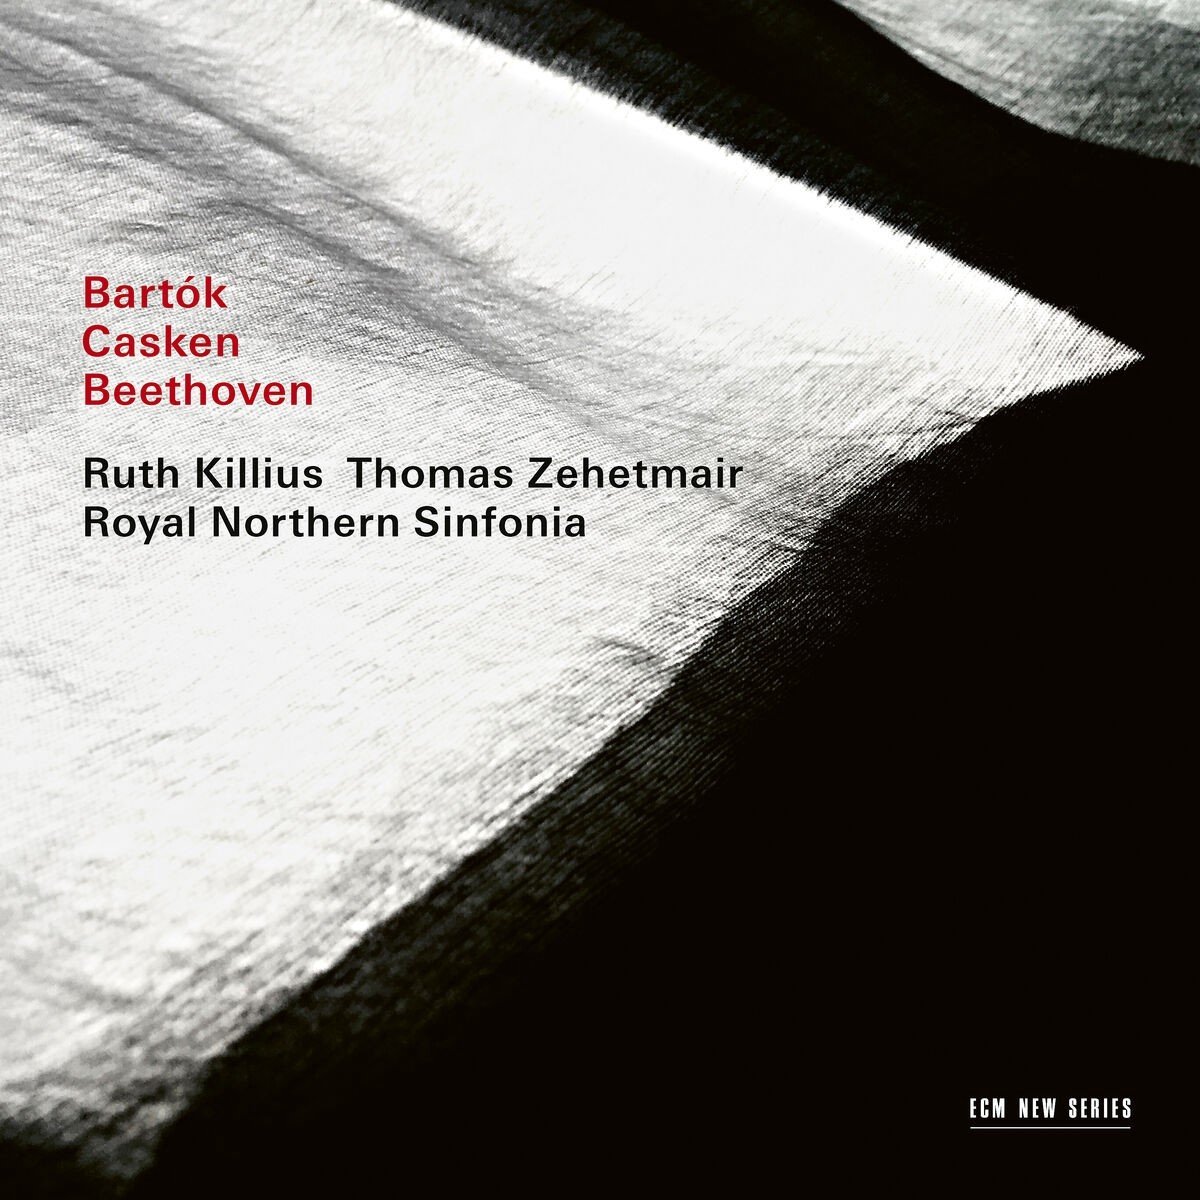 Bartok. Casken. Beethoven | Ruth Killius, Thomas Zehetmair, Royal Northern Sinfonia